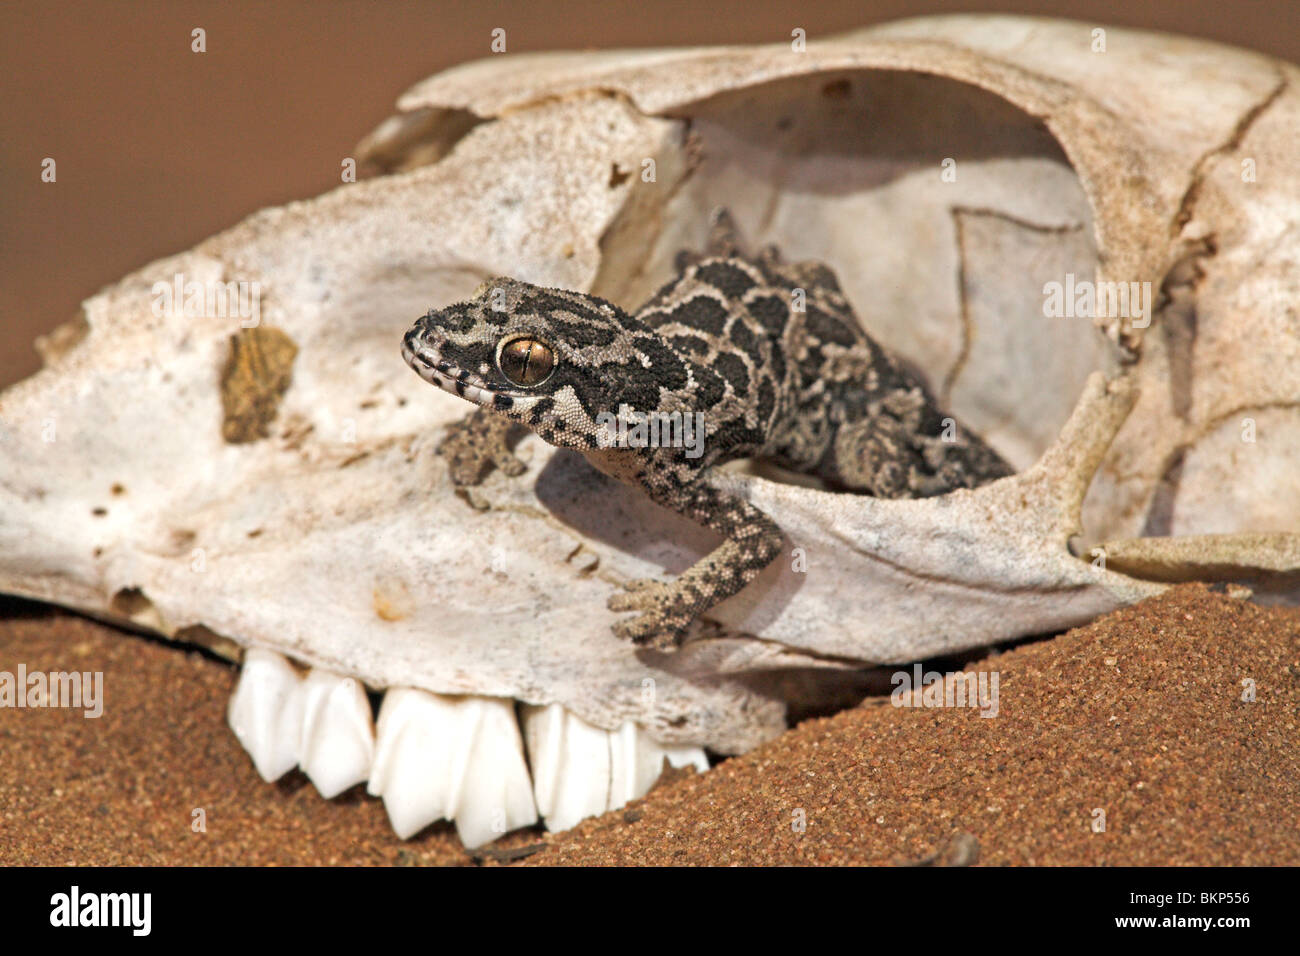 Bonita foto de un sapo gruesa spotted gecko que utiliza para ocultar en una calavera Foto de stock